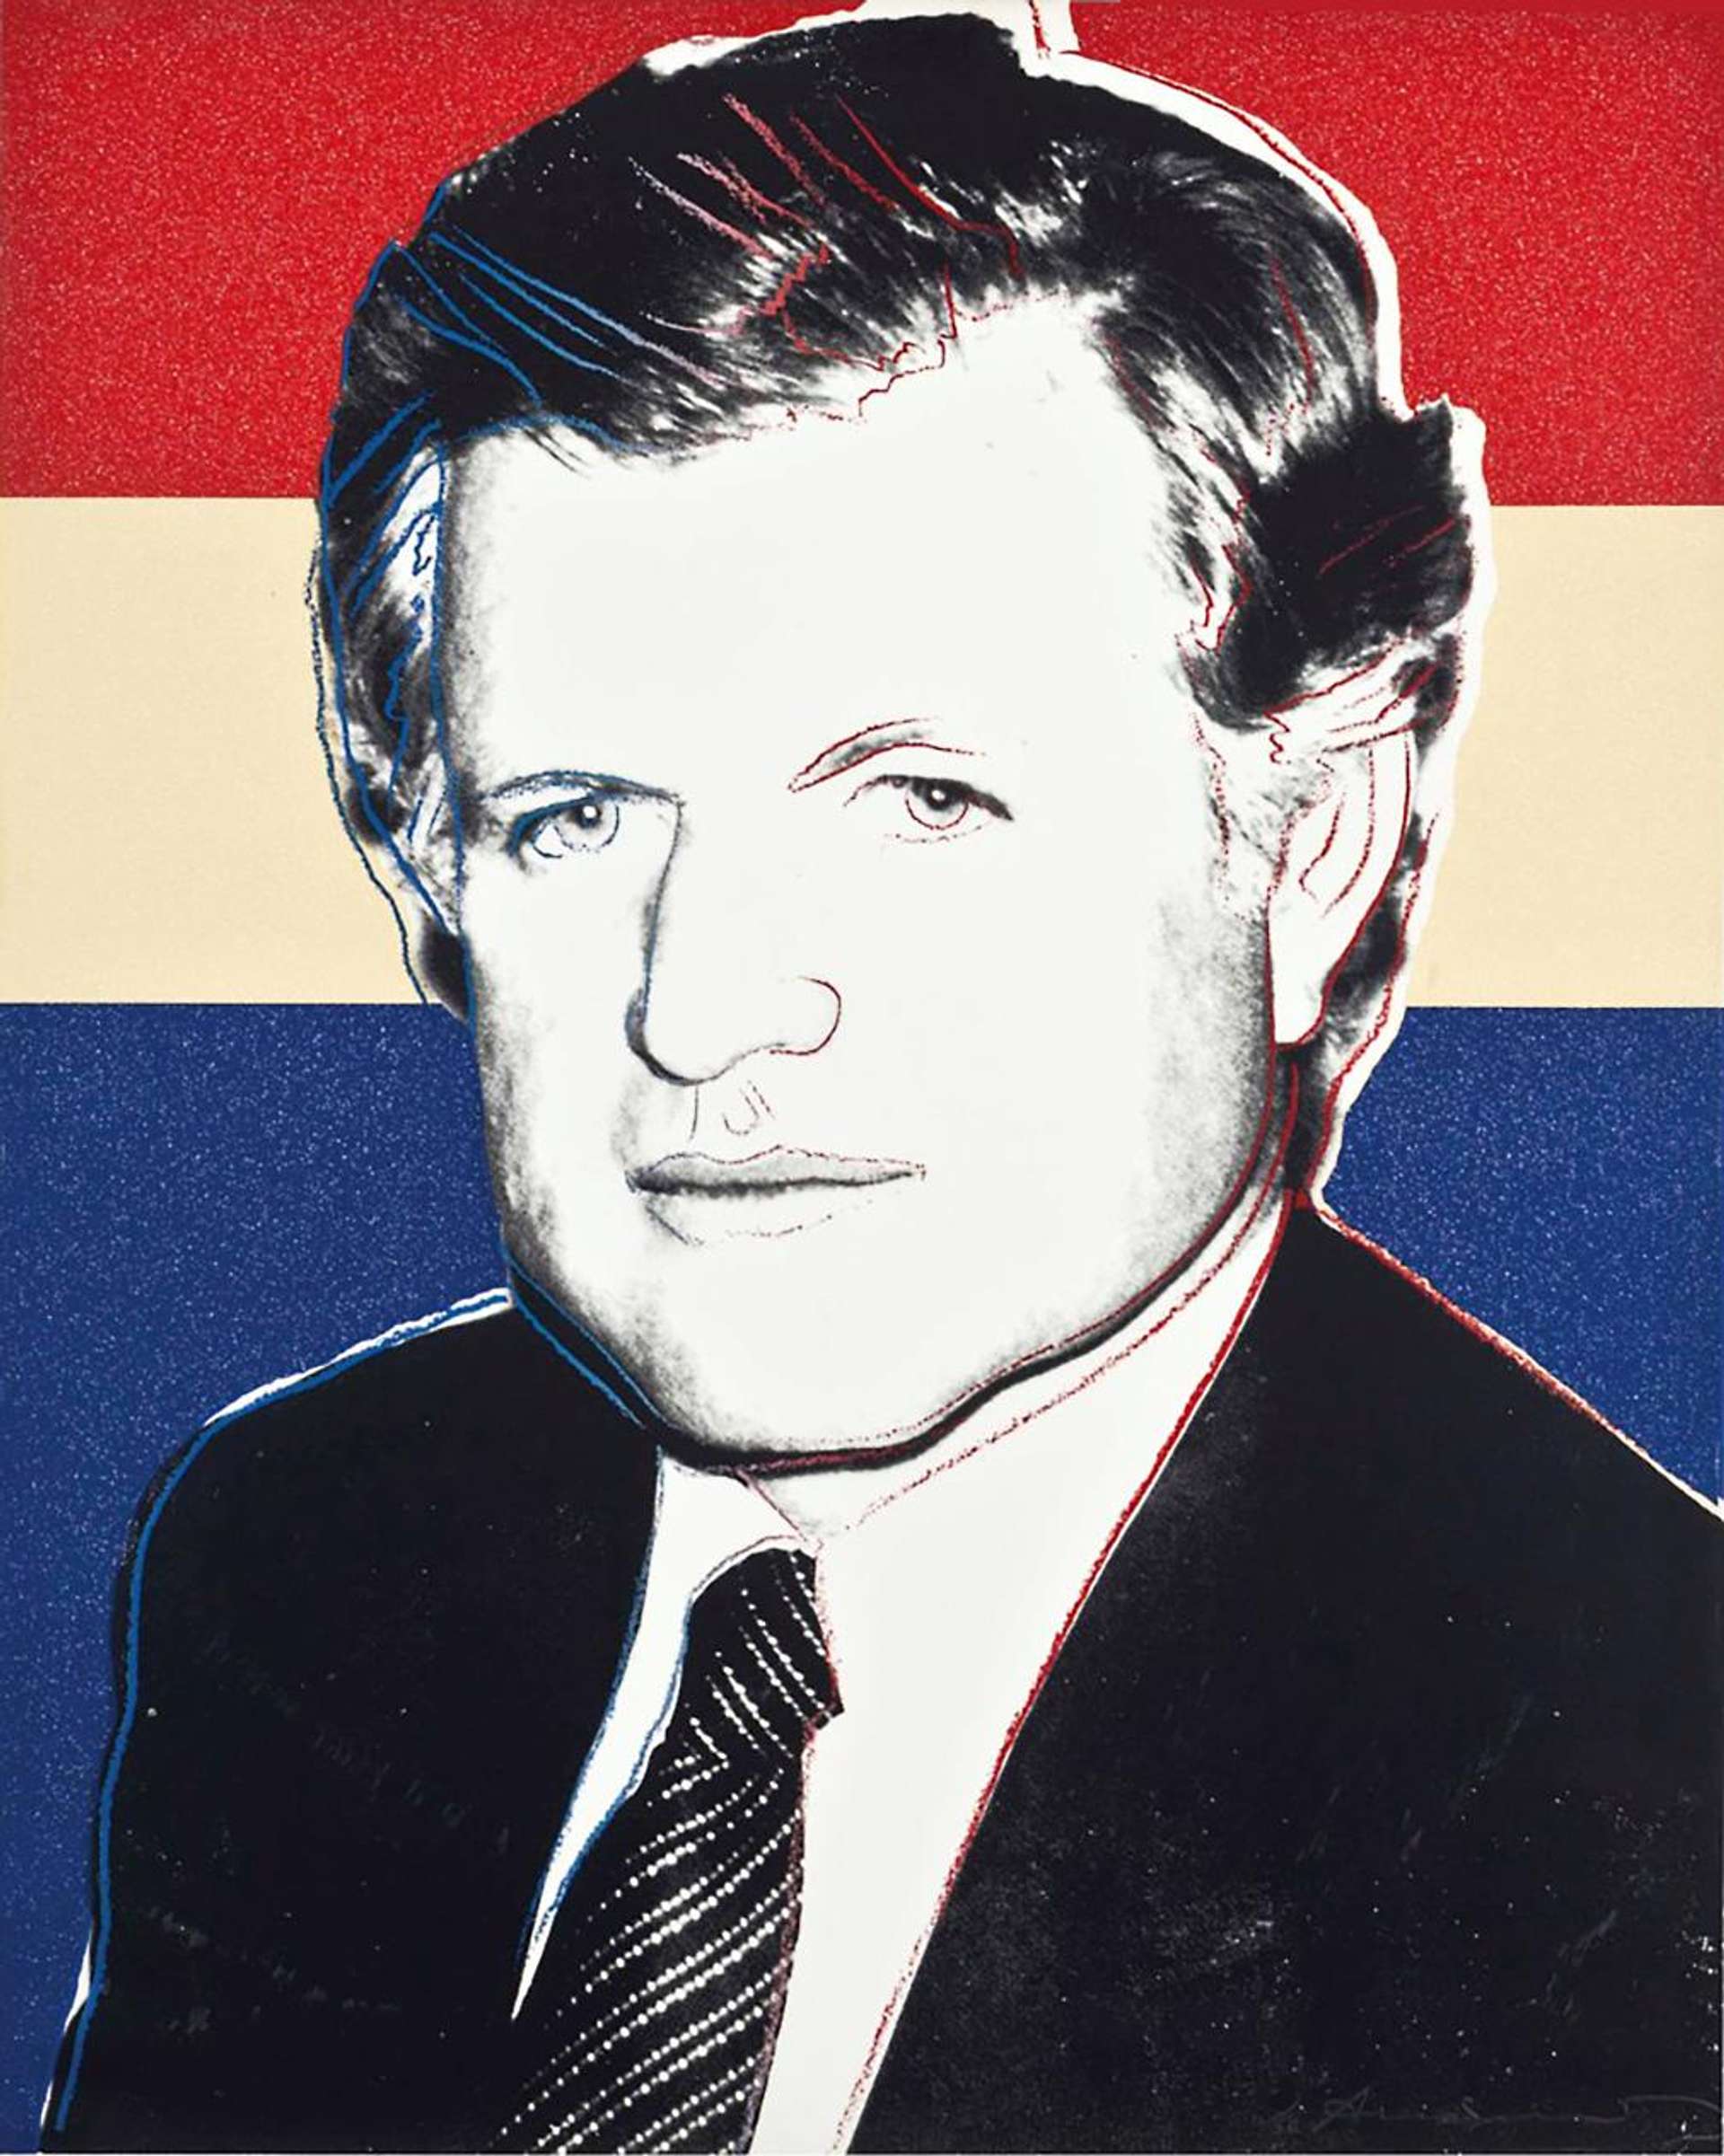 Edward Kennedy Deluxe Edition (F. & S. II.241) - Signed Print by Andy Warhol 1980 - MyArtBroker